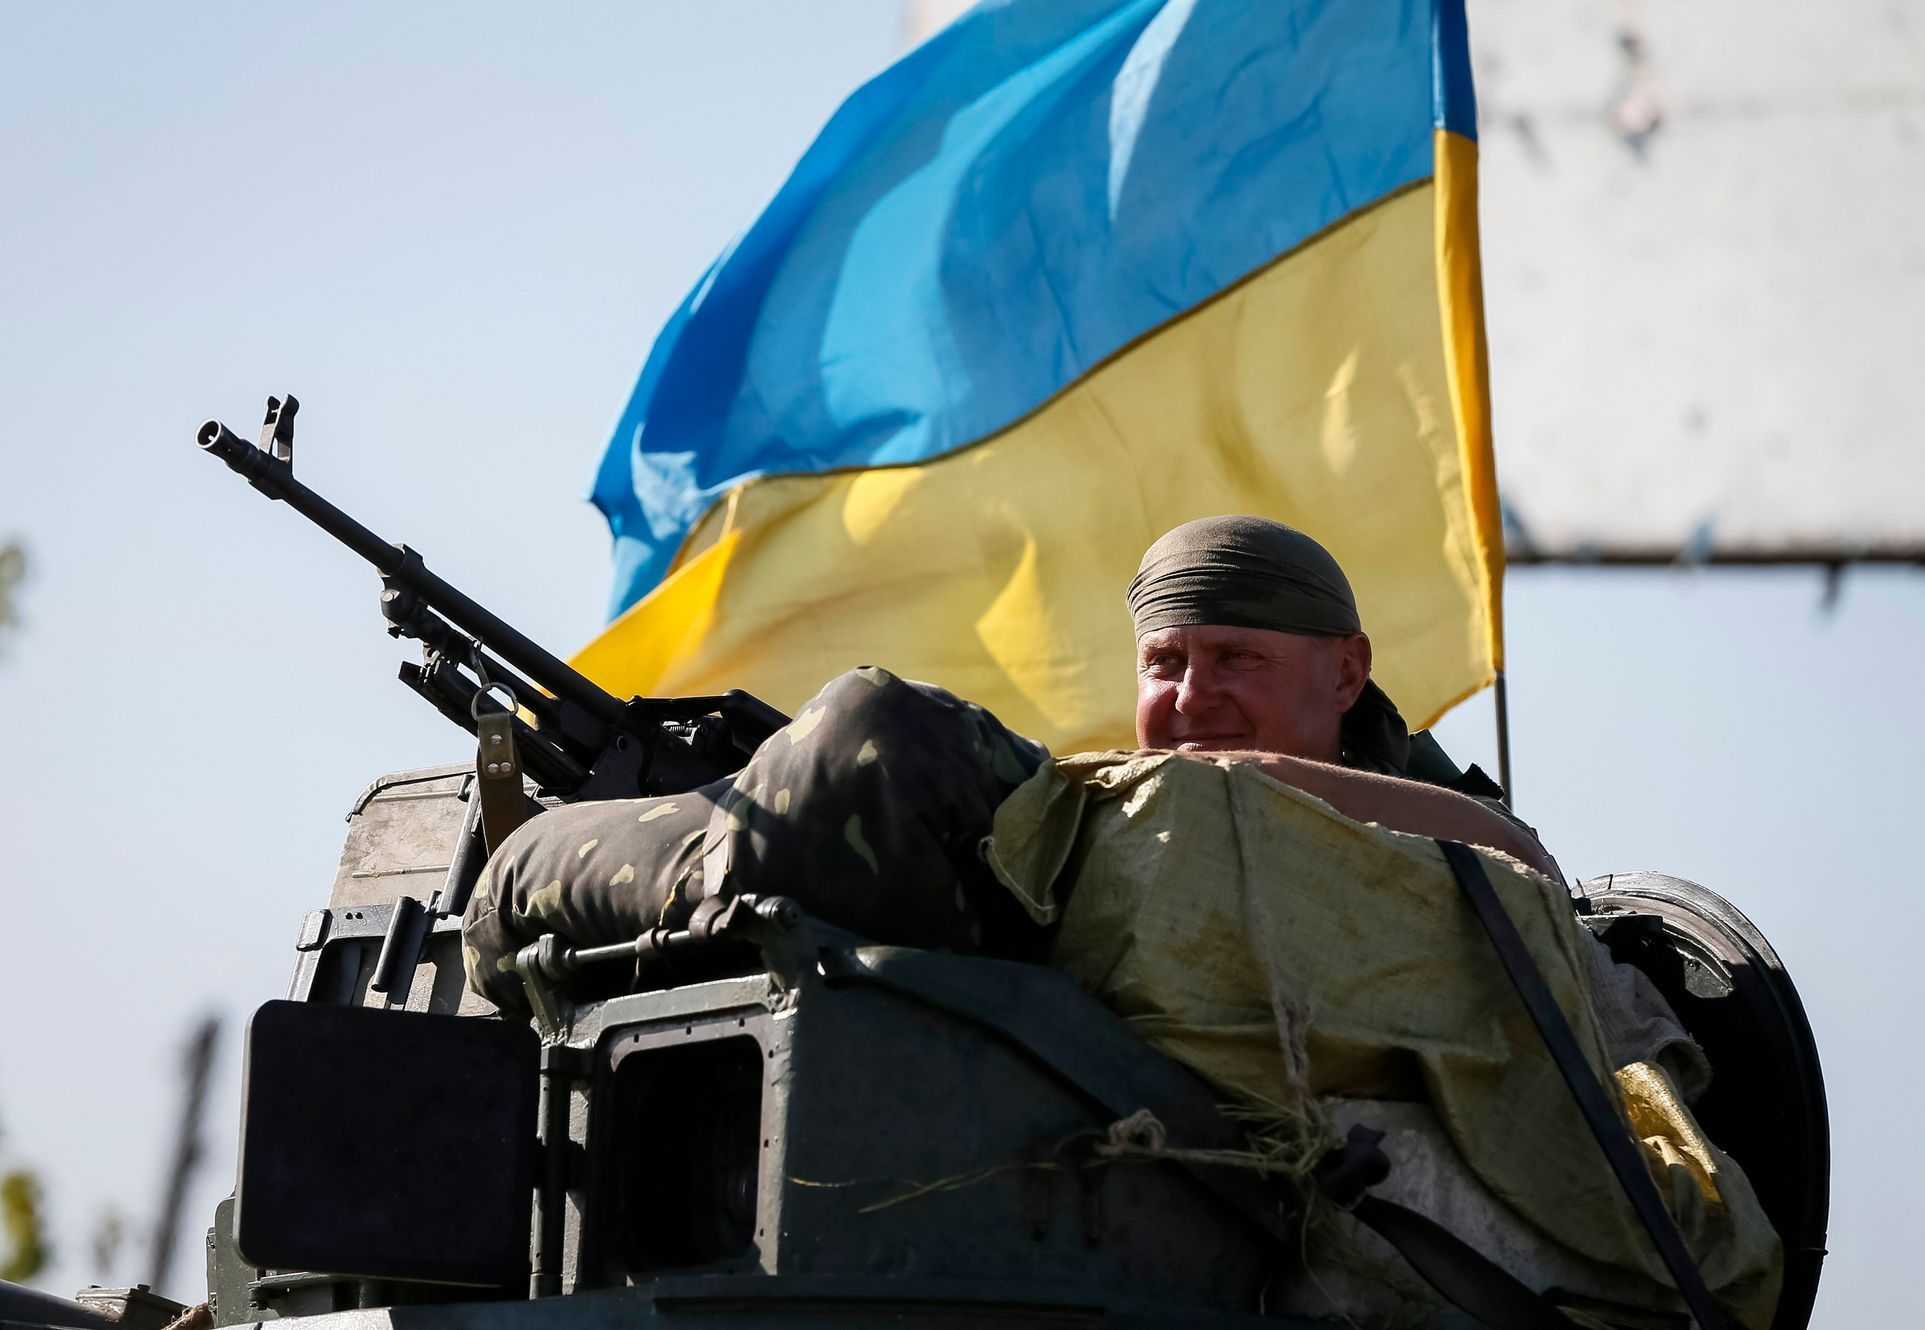 Ukrajina - Slavjansk - armáda